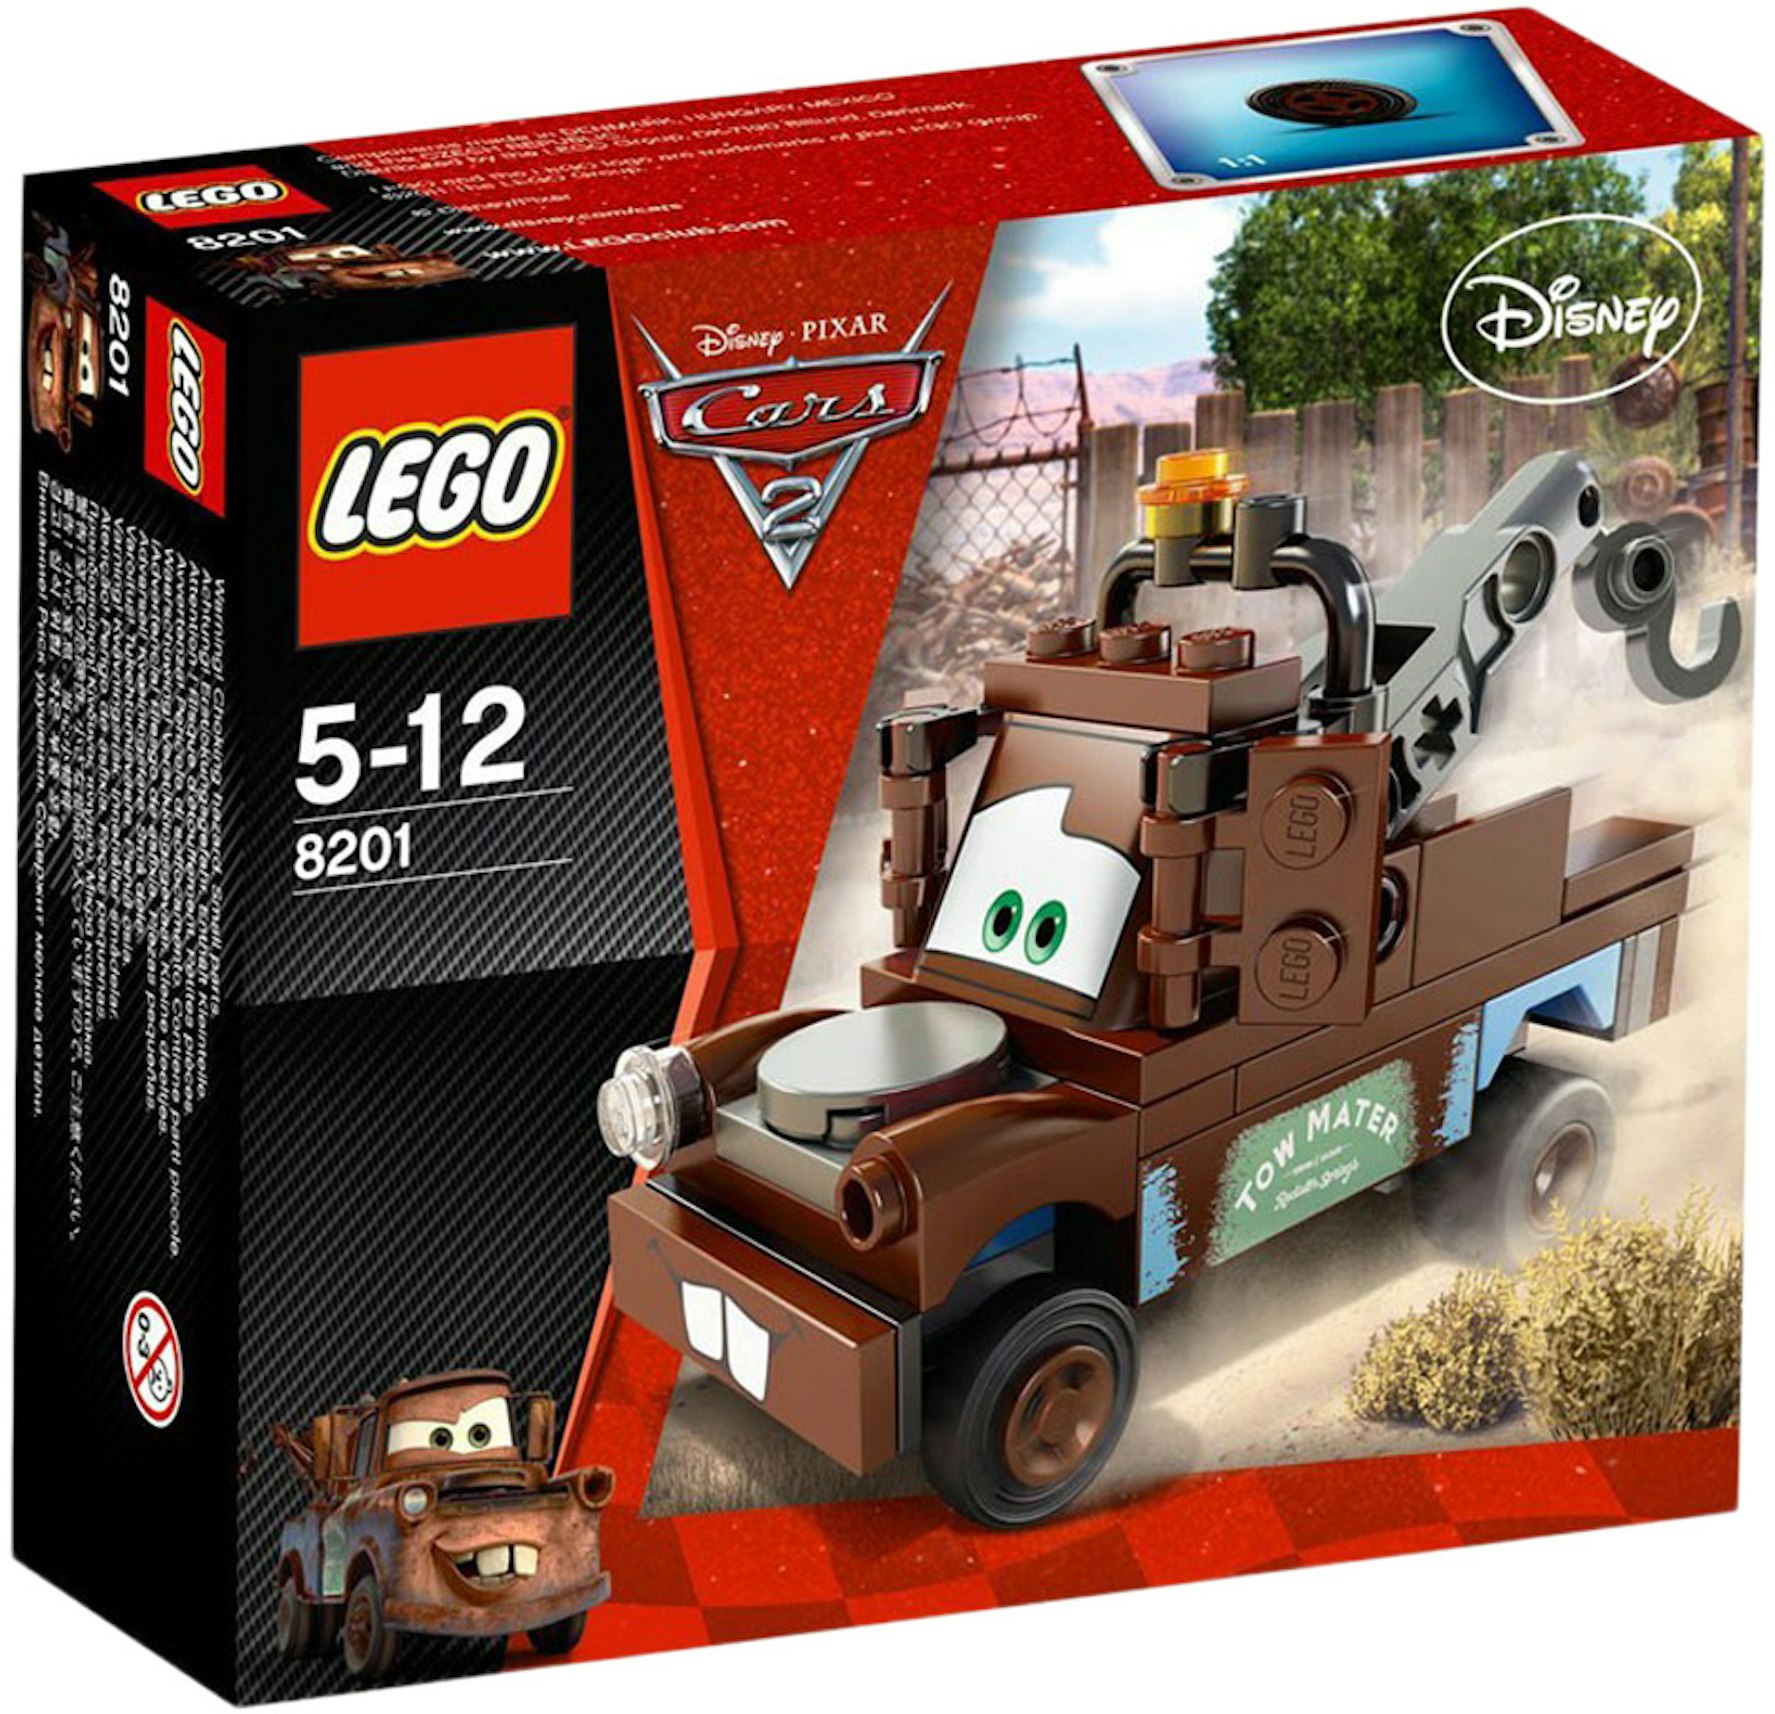 Disney/Pixar Cars 2 Radiator Mater Set 8201 -